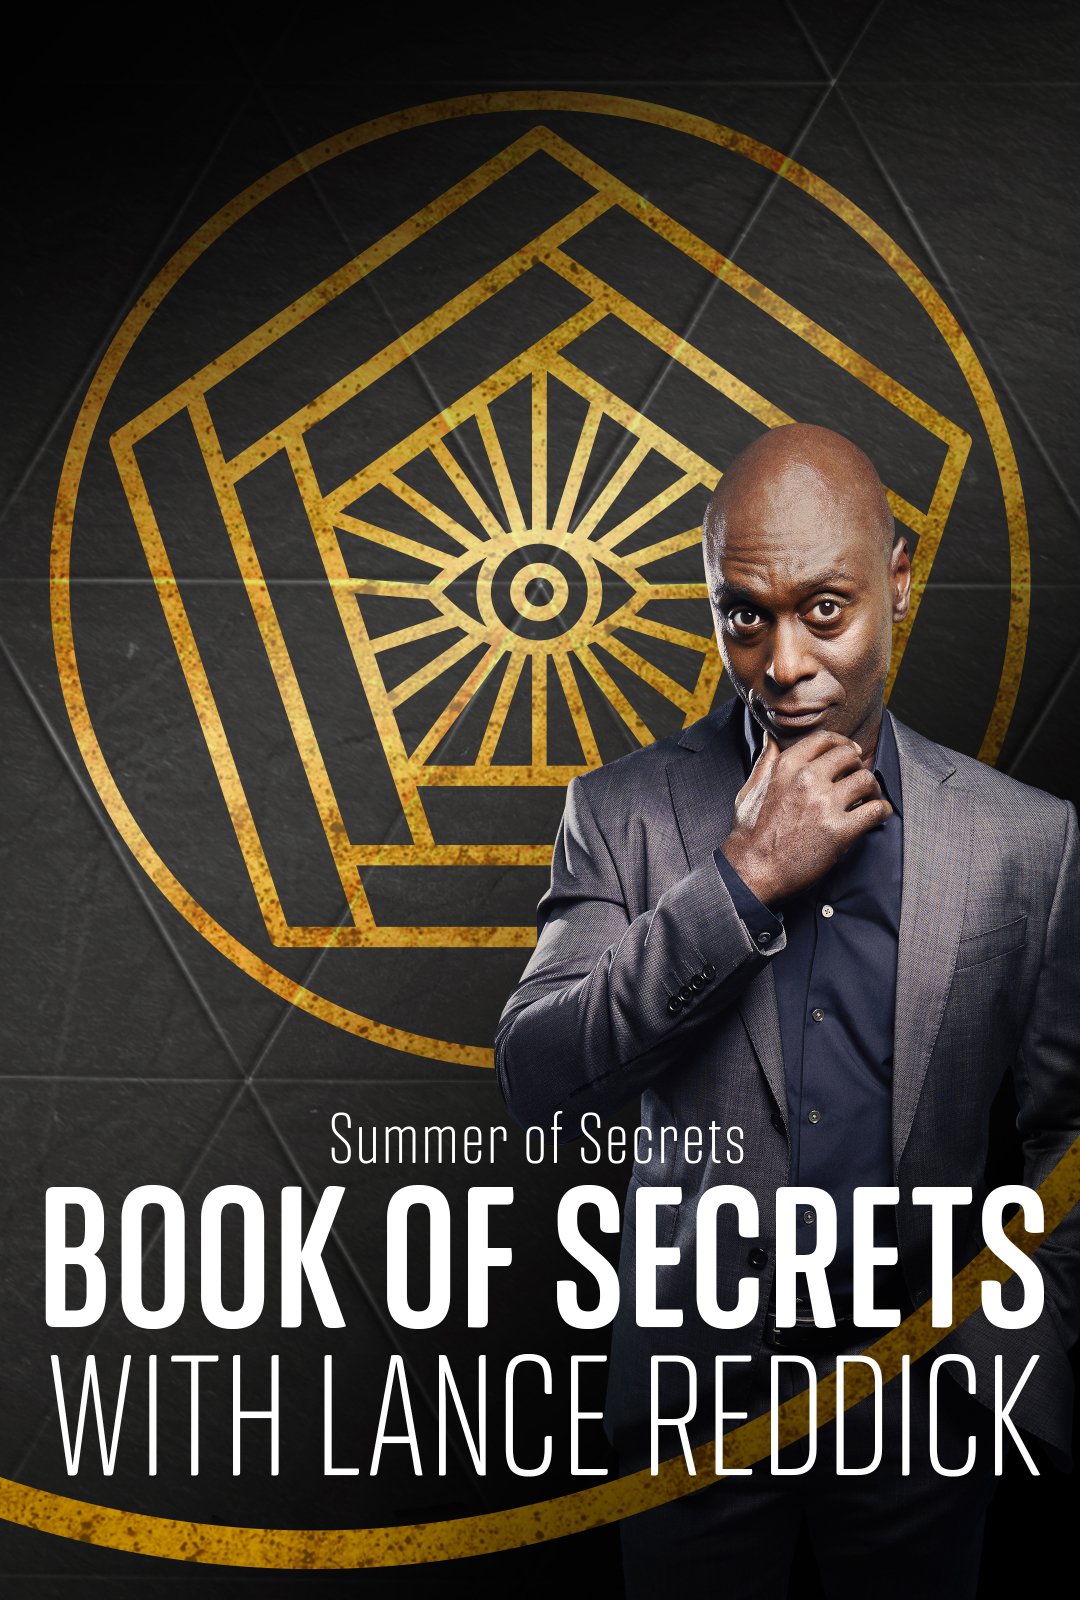 Lance Reddick - America's Book of Secrets Cast